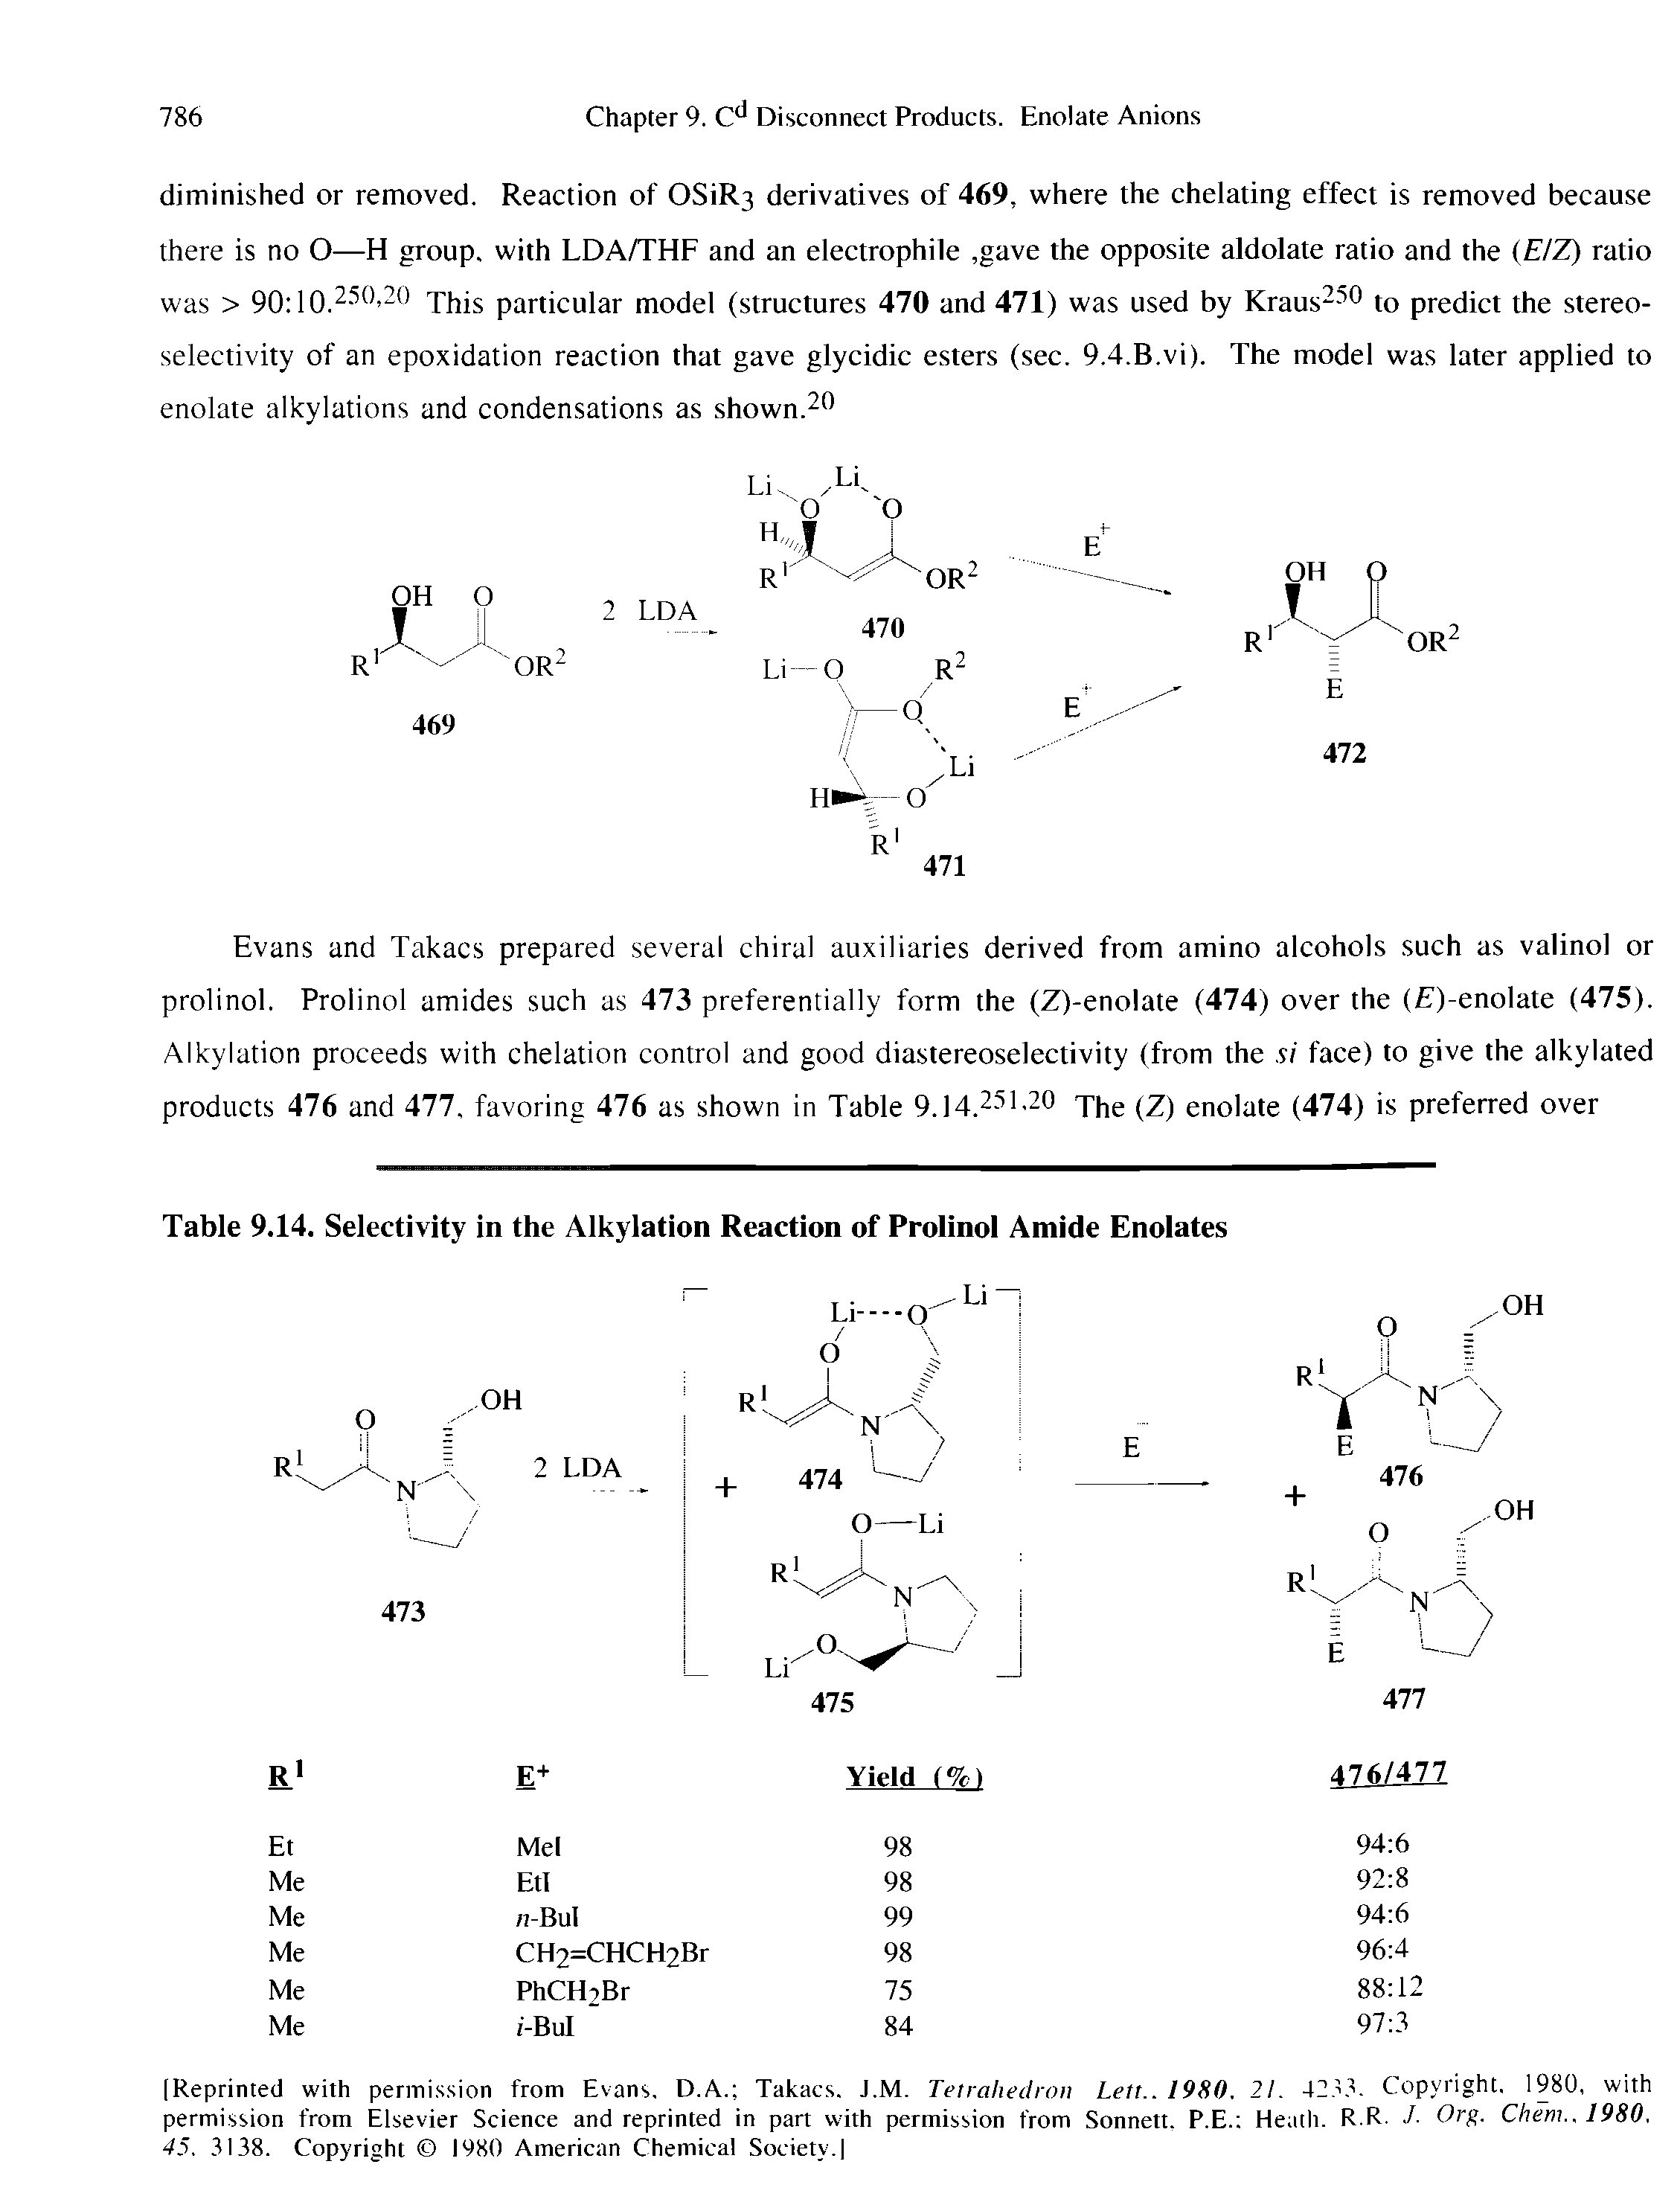 Table 9.14. Selectivity in the Alkylation Reaction of Prolinol Amide Enolates...